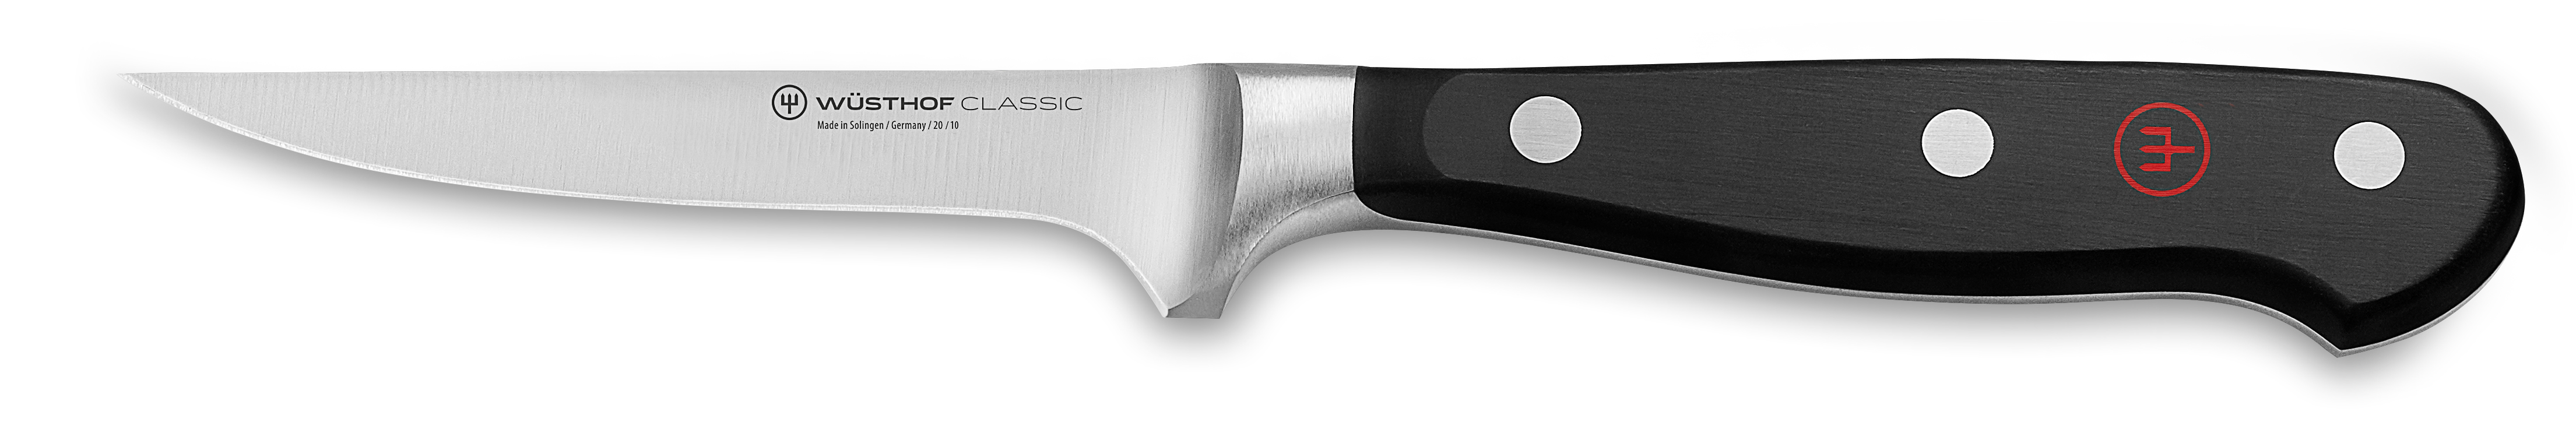 Ausbeinmesser / Boning knife